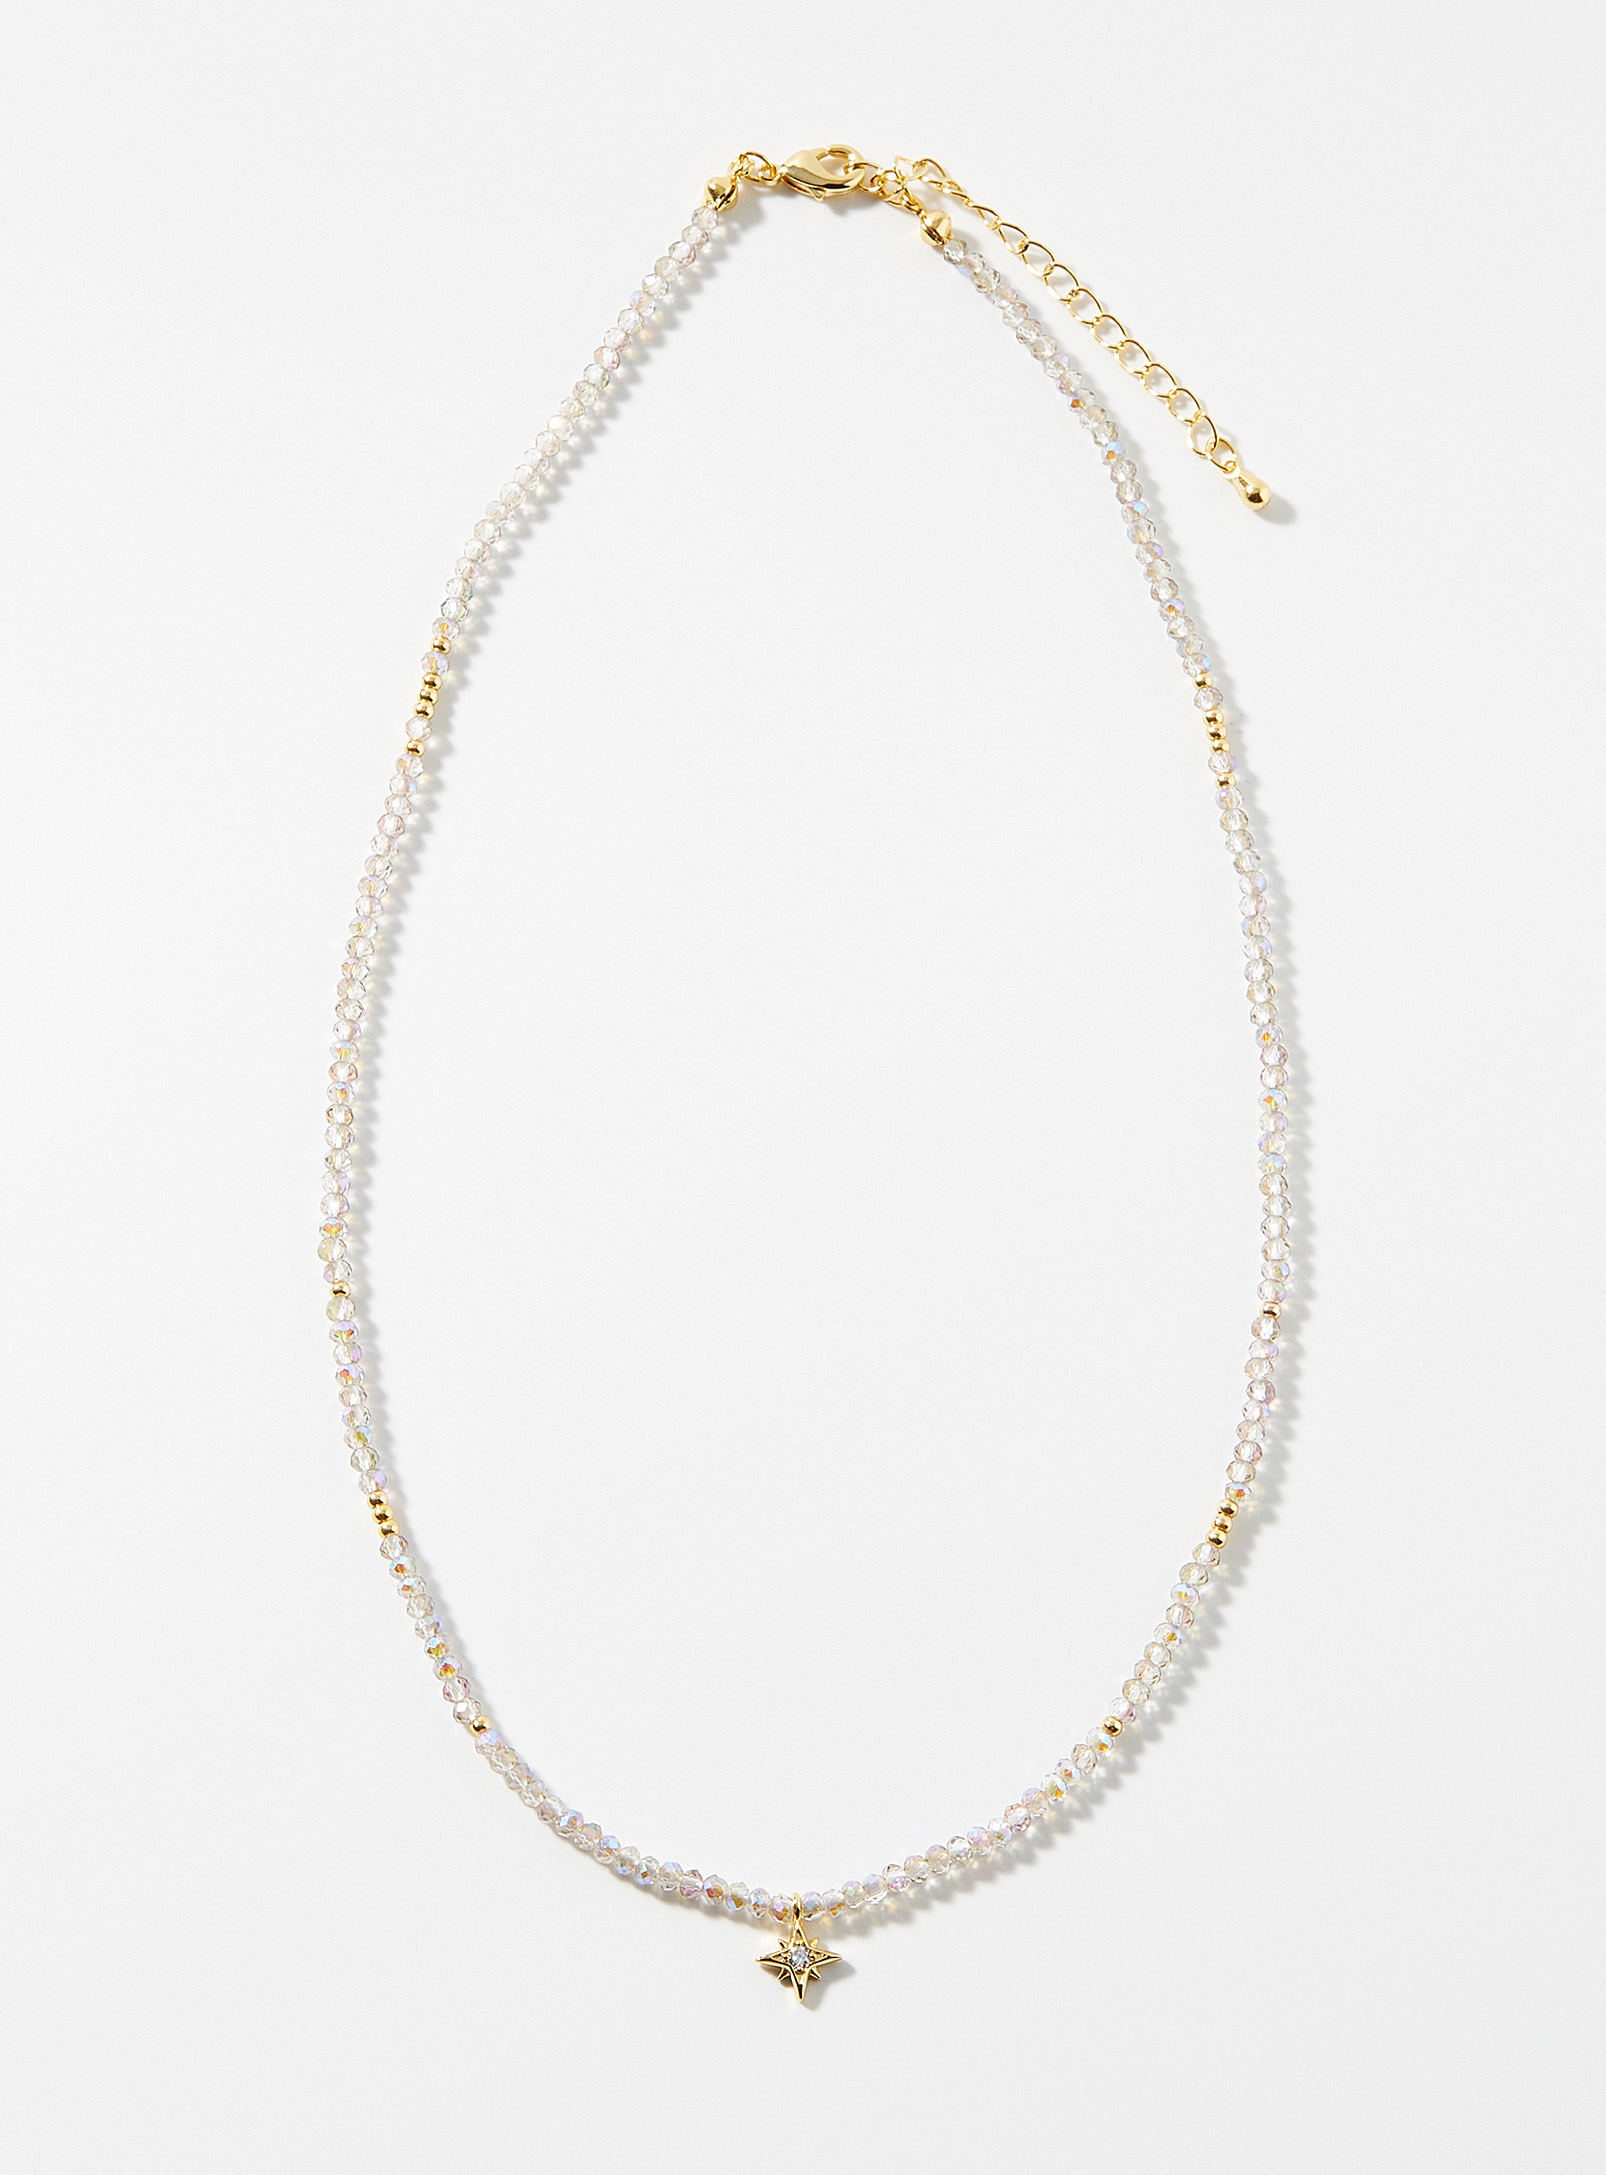 Simons - Women's Star iridescent bead necklace